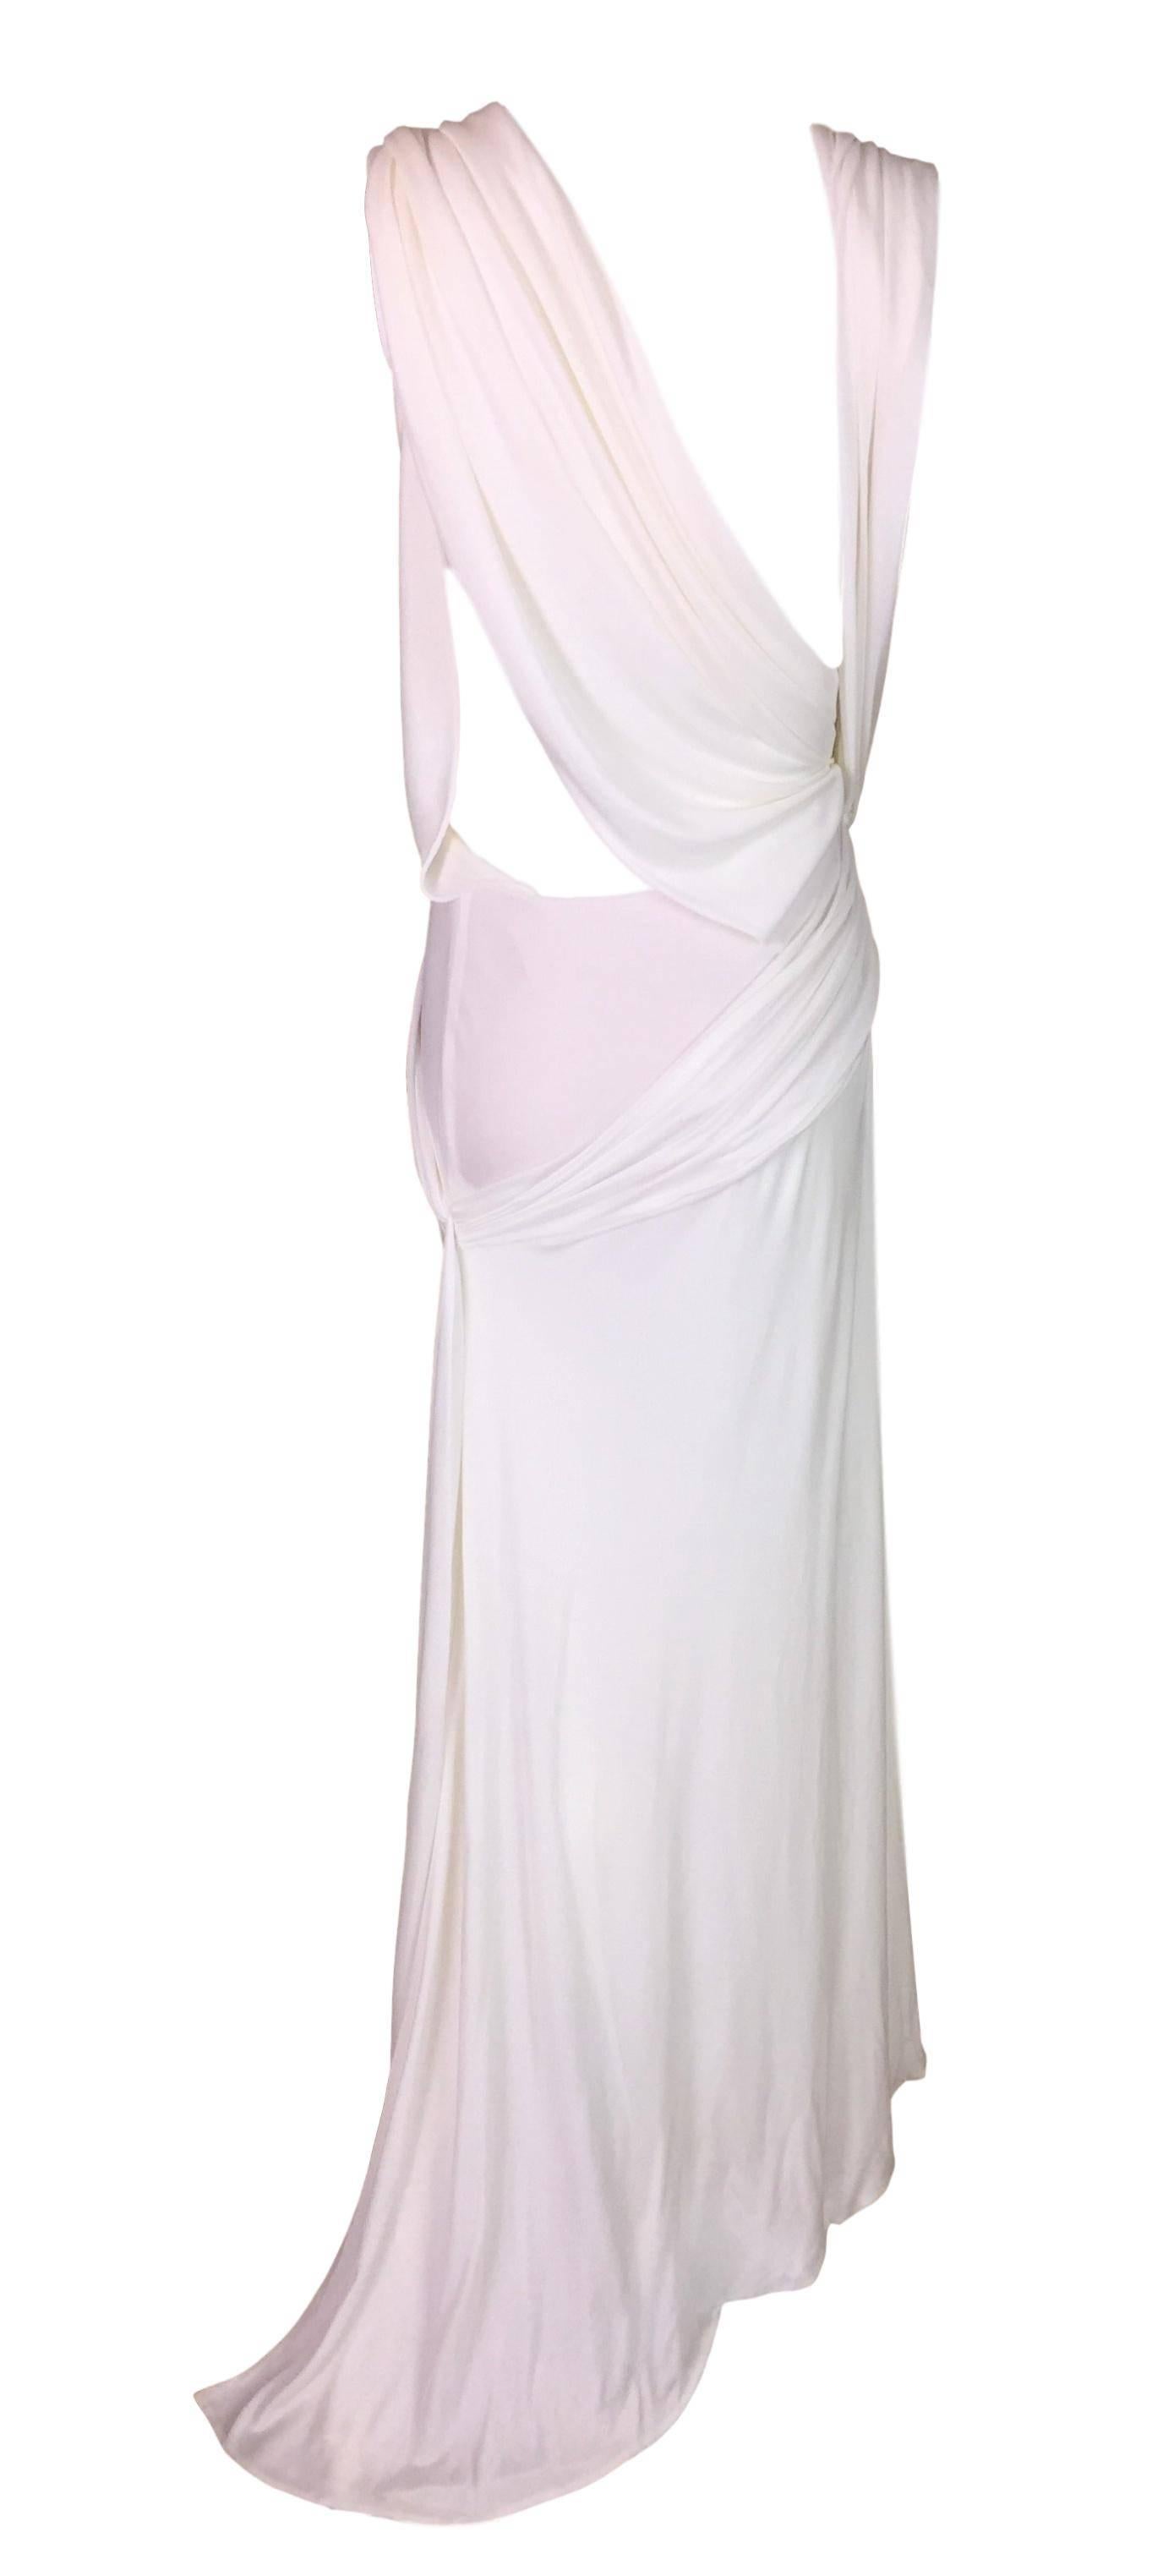 Women's F/W 1999 Atelier Versace Sheer White Plunging Beaded Medusa Gown Dress